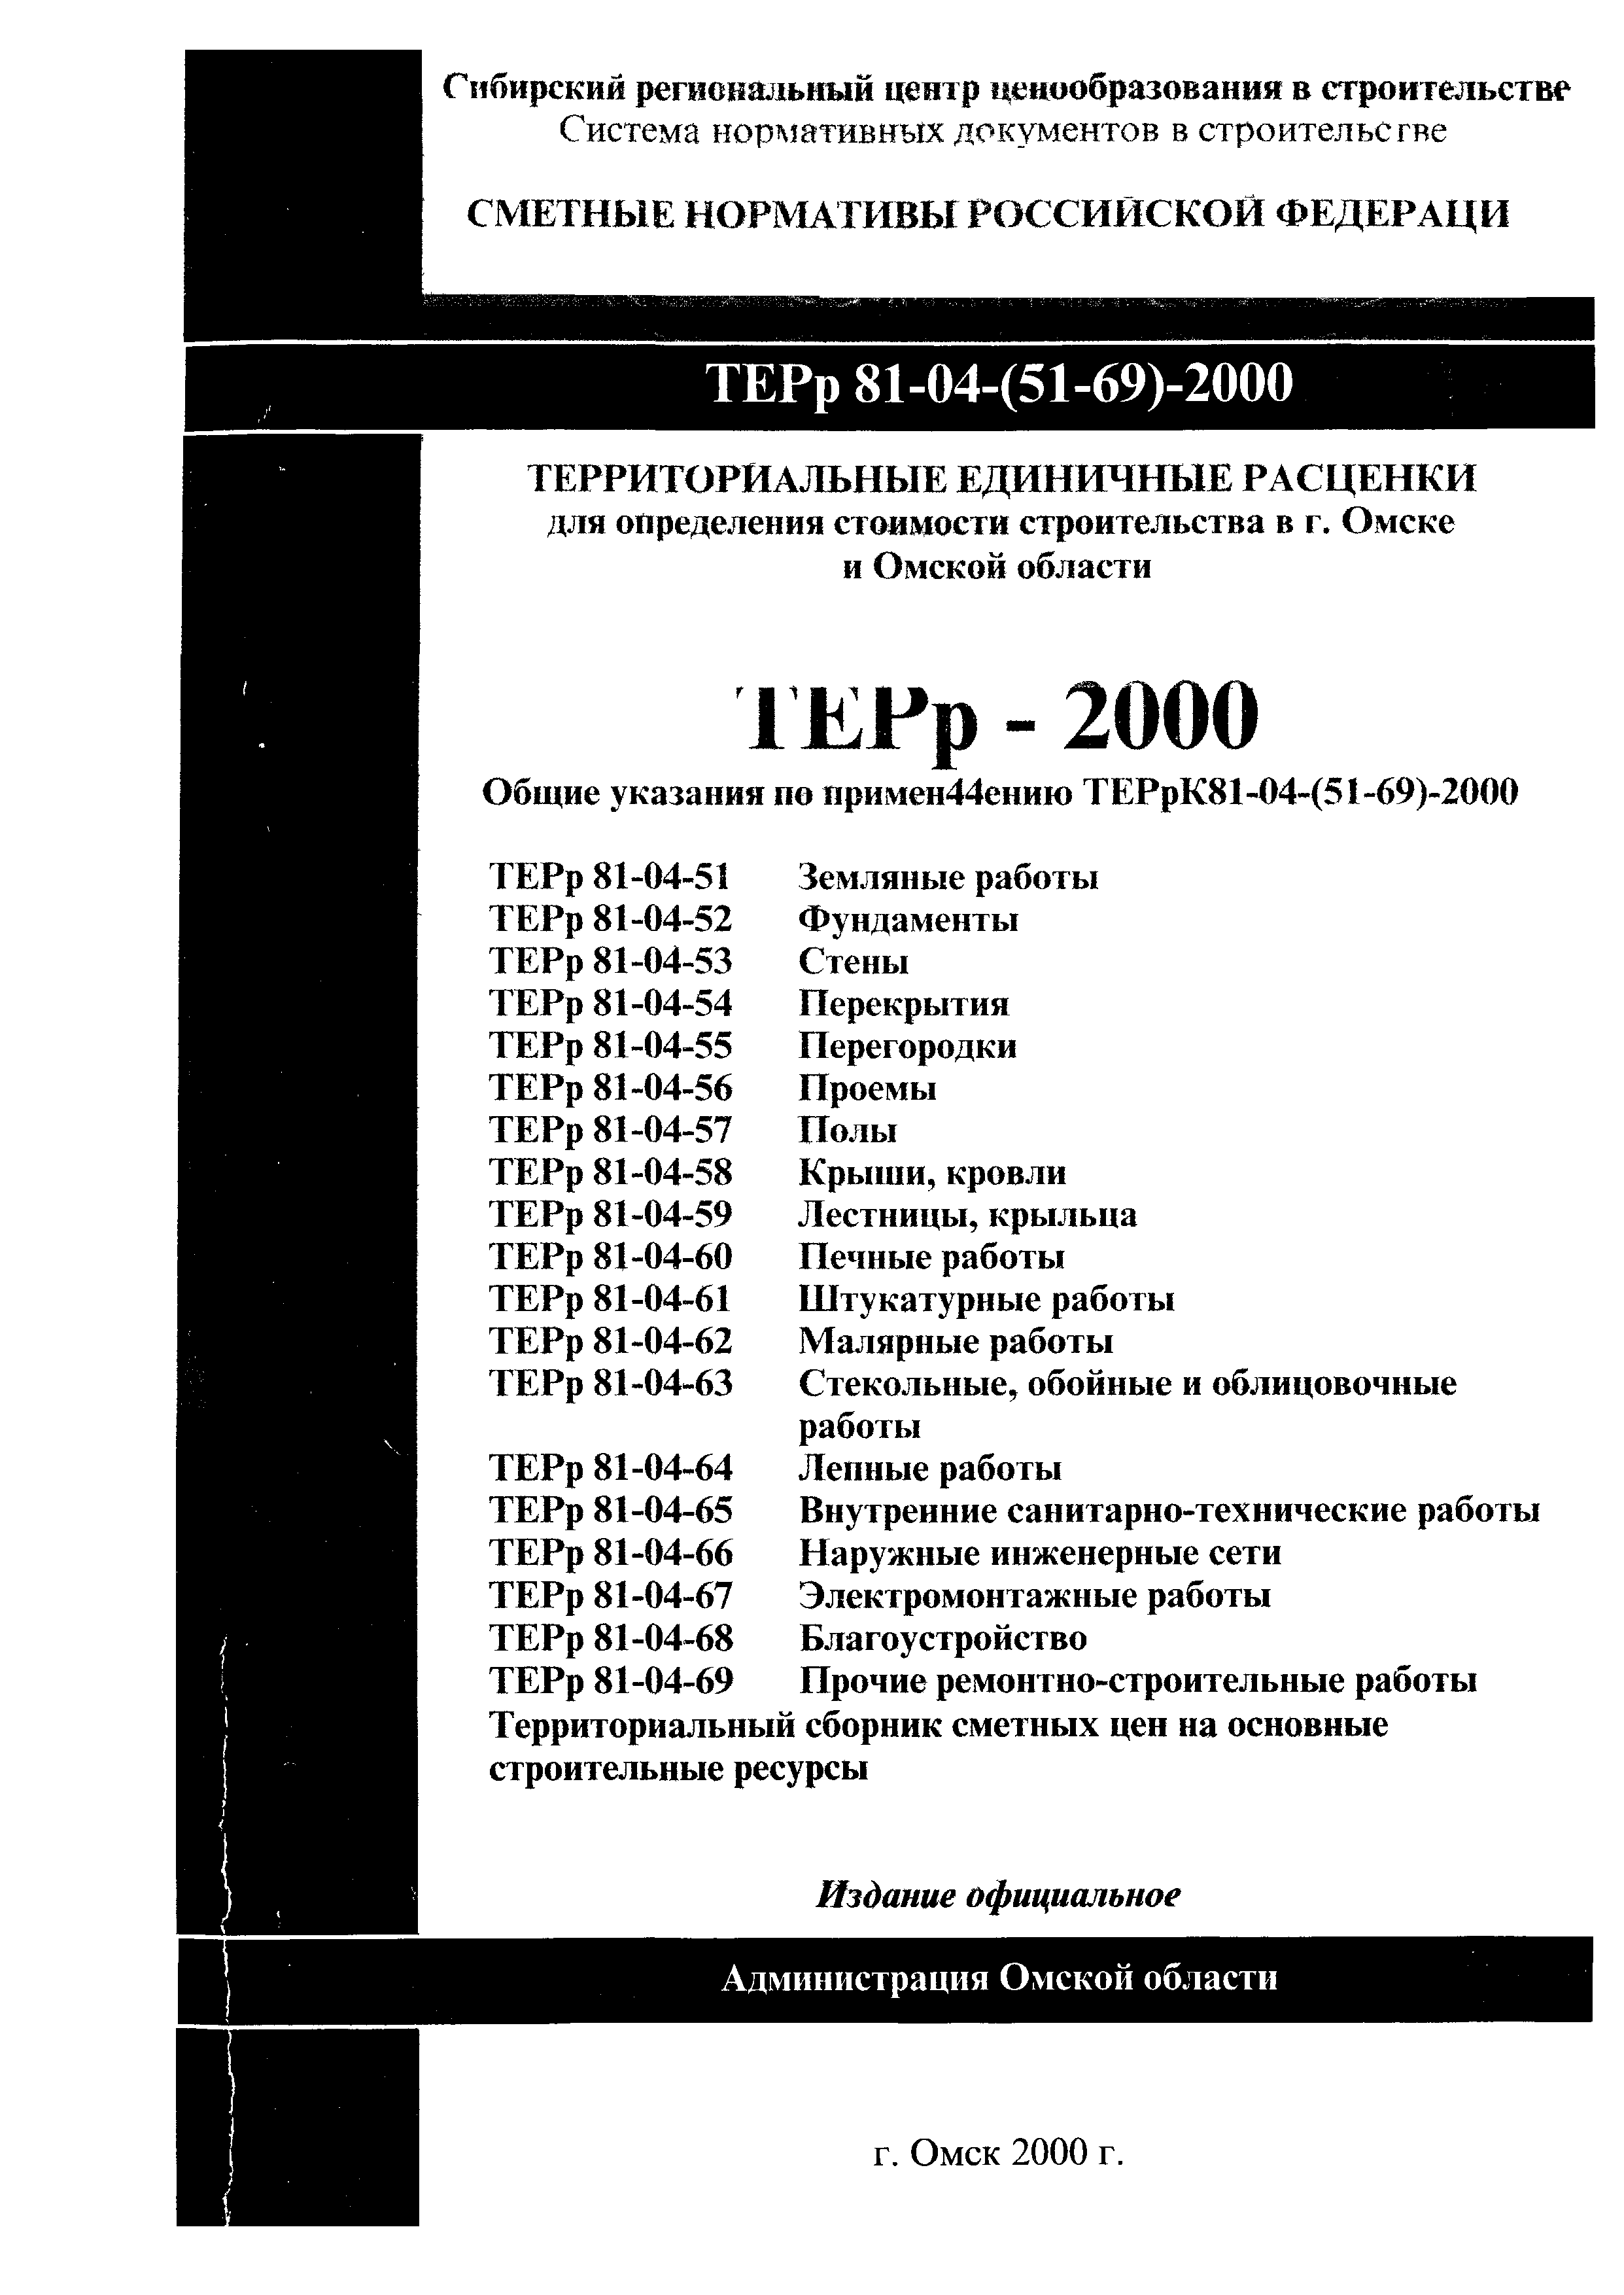 ТЕРр Омской области 2000-61